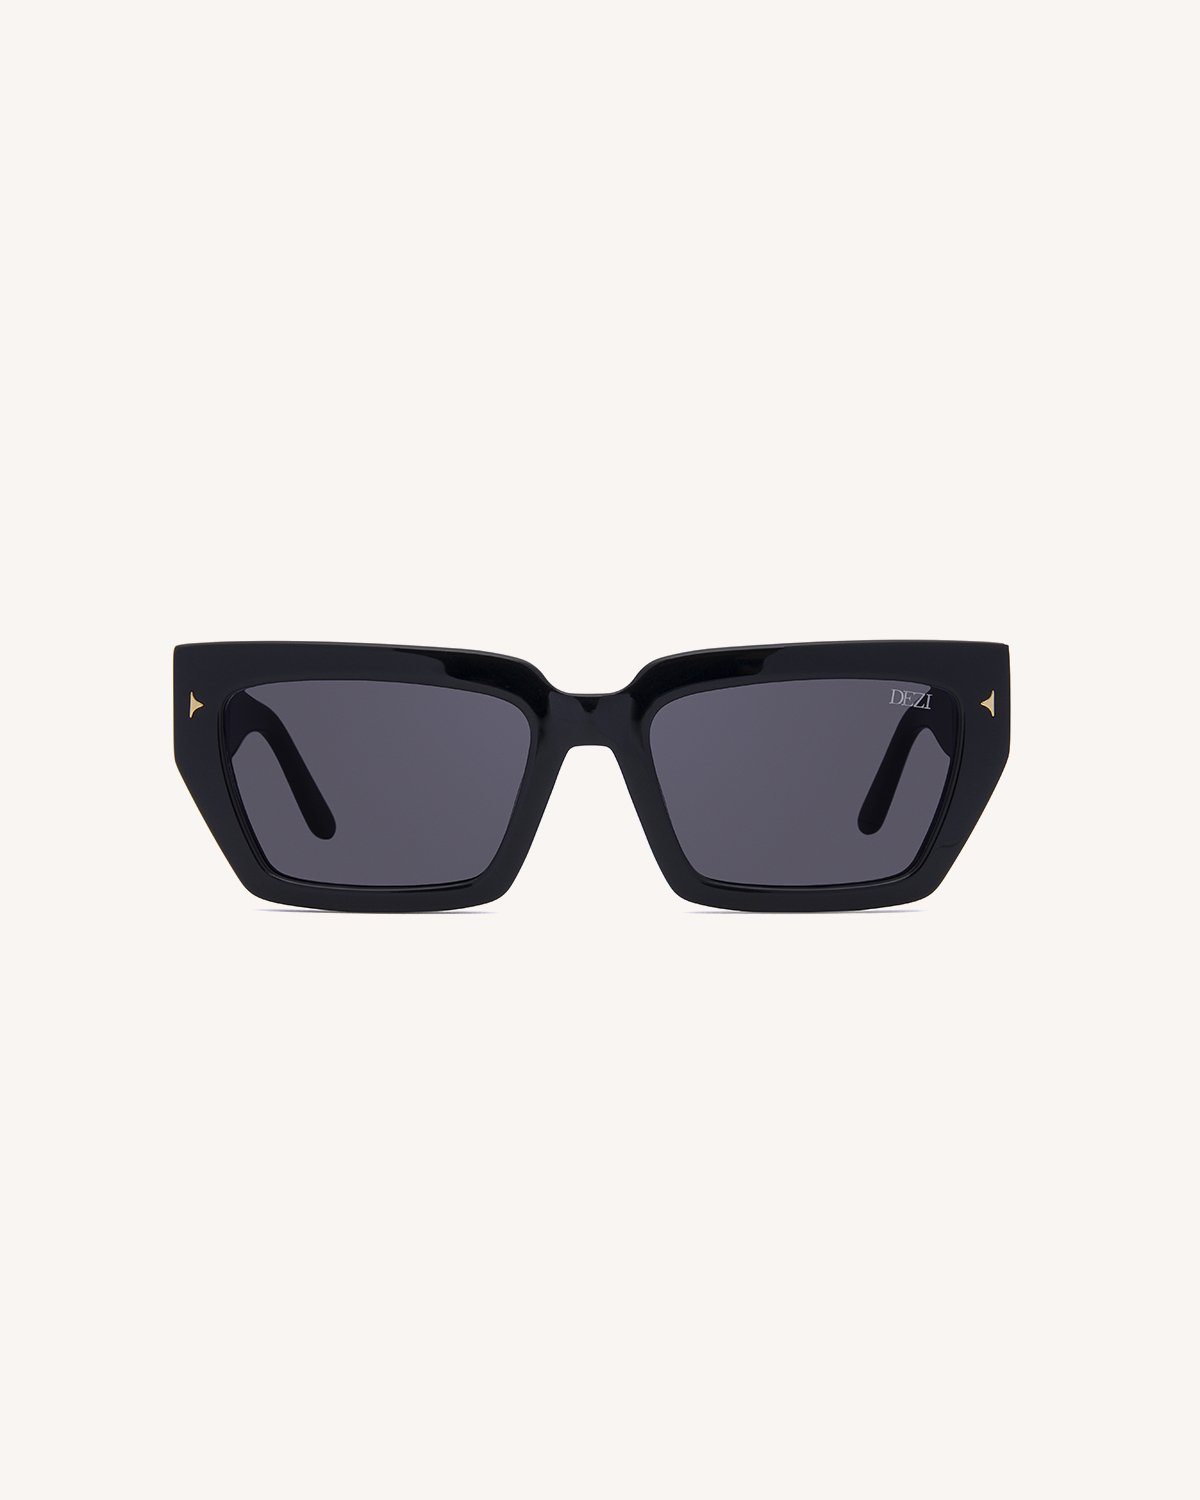 Louis Vuitton My Monogram Round Sunglasses Dark Tortoise Acetate. Size E